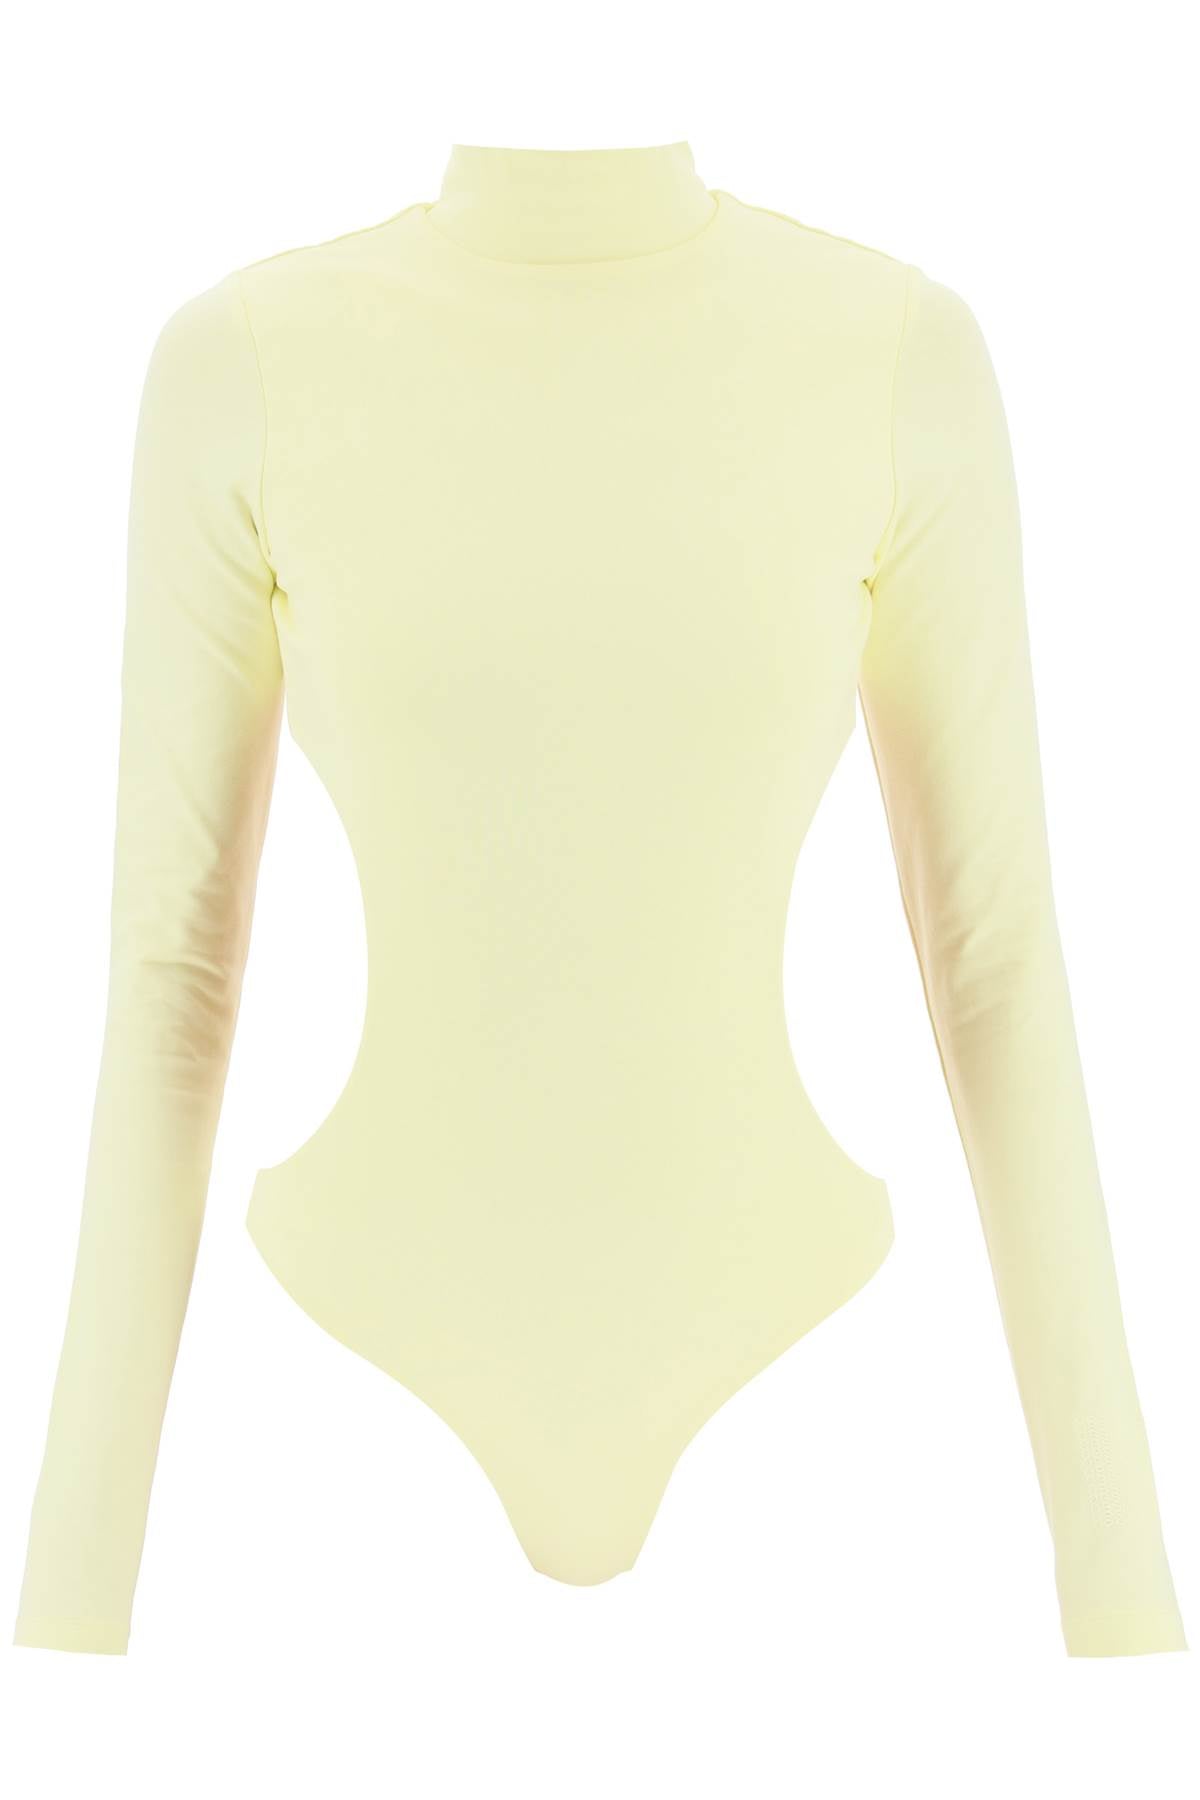 marc jacobs-body 'the cutout bodysuit'-donna